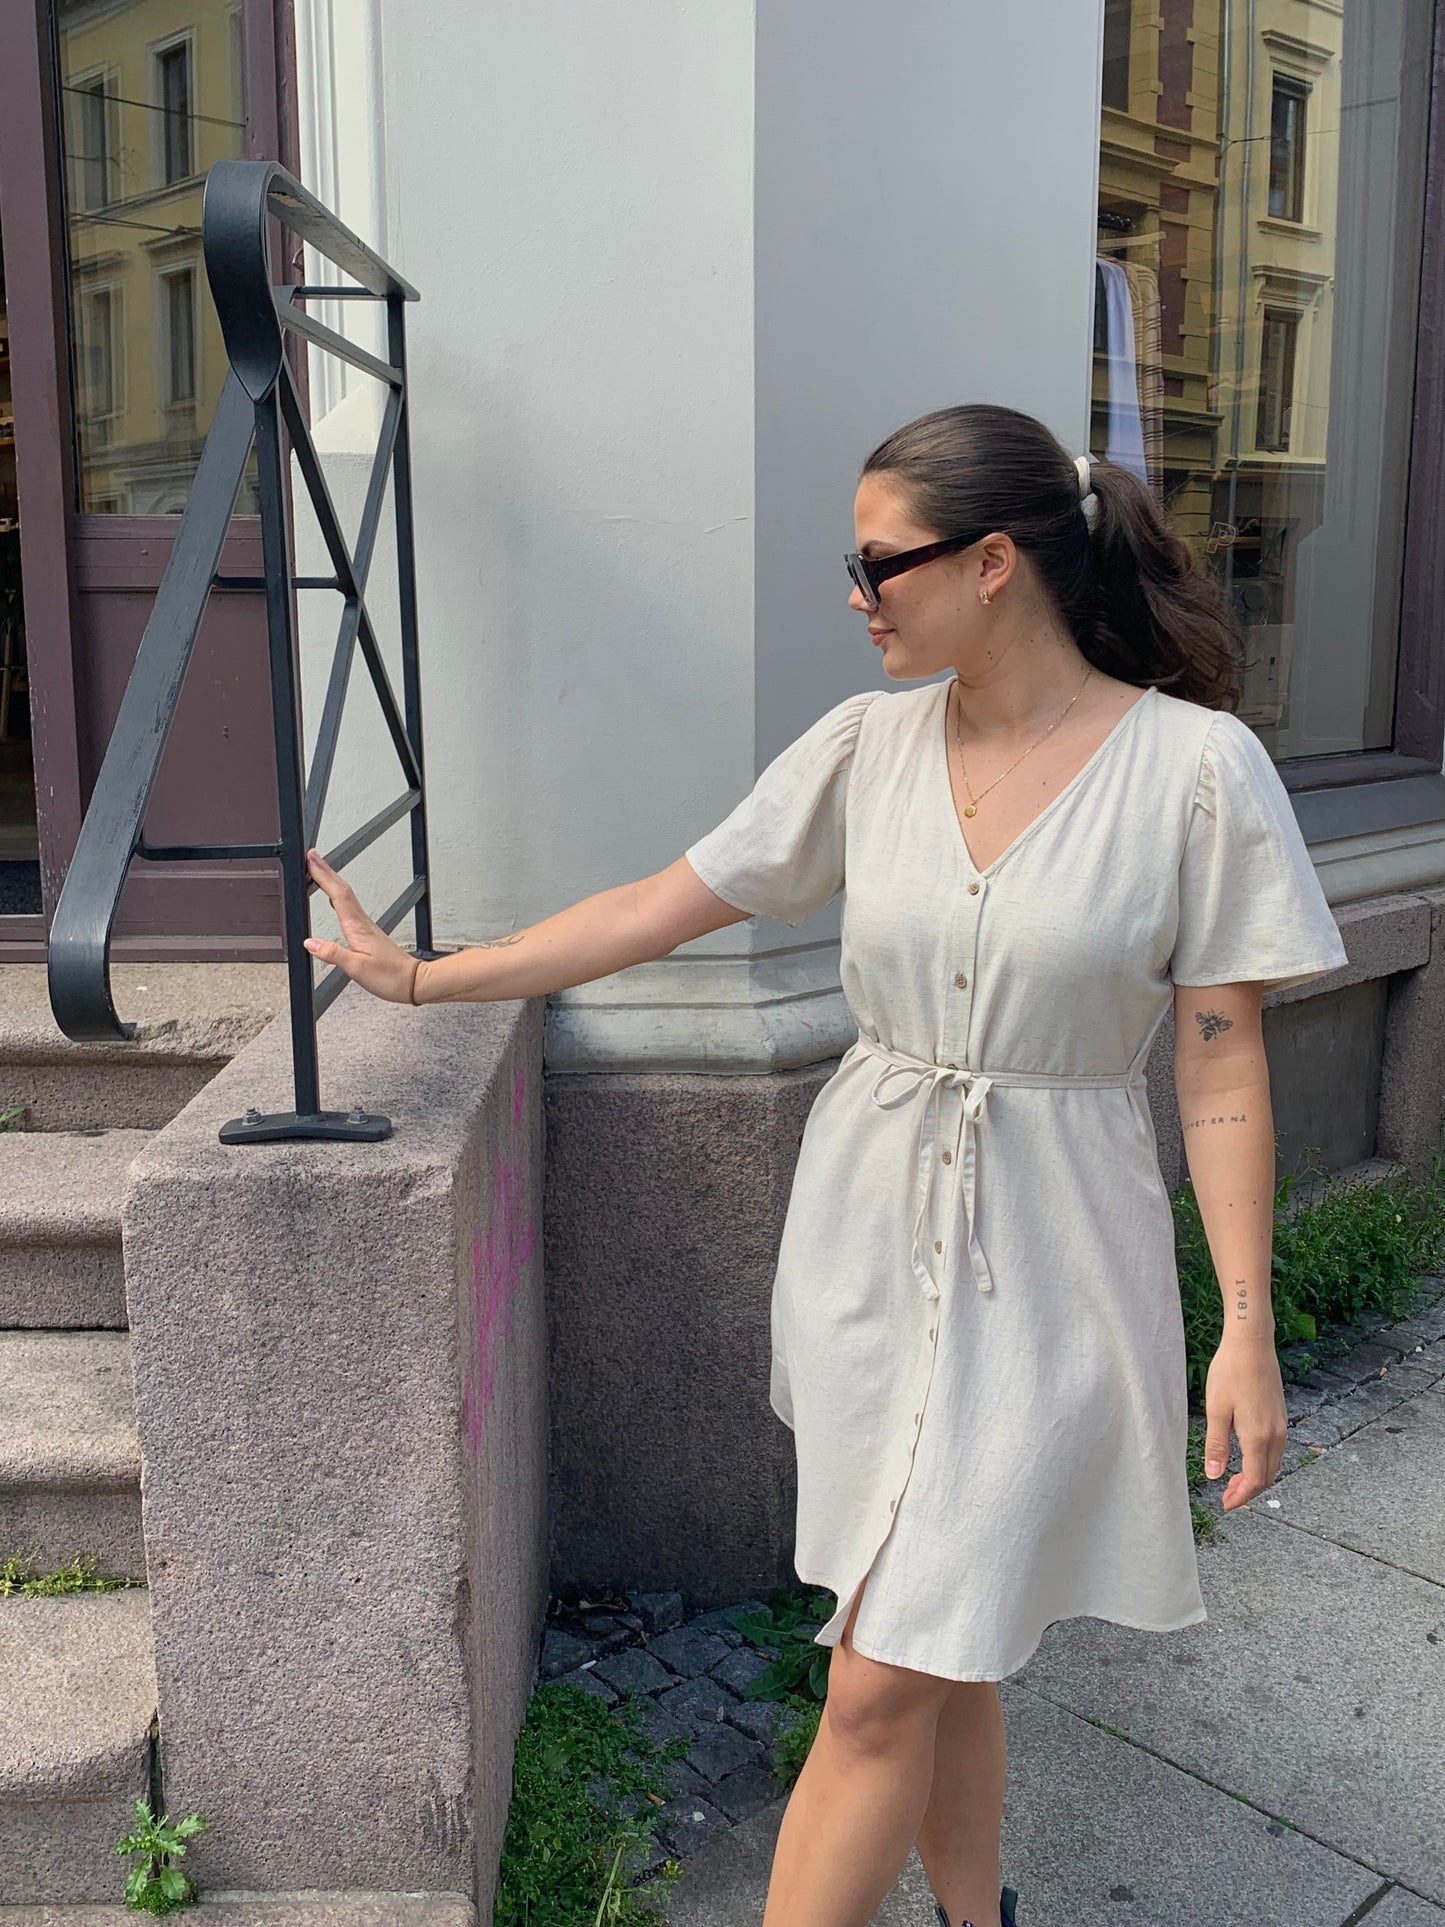 ONLVITA Linen Short Dress - Beige